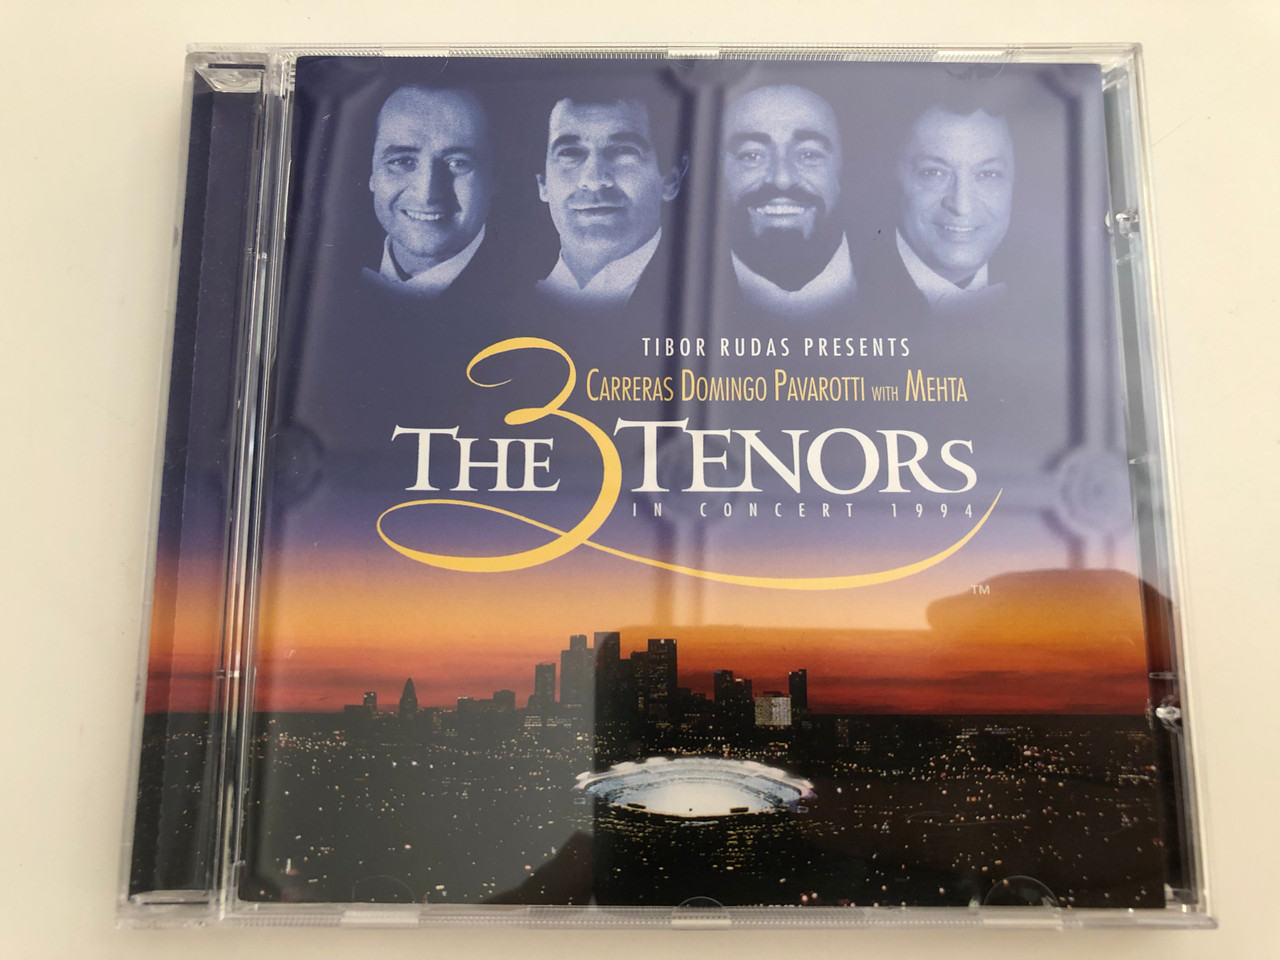 The 3 Tenors in Concert 1994 / Carreras, Domingo, Pavarotti with Mehta /  Audio CD 1994 / Teldec WE 805 - bibleinmylanguage